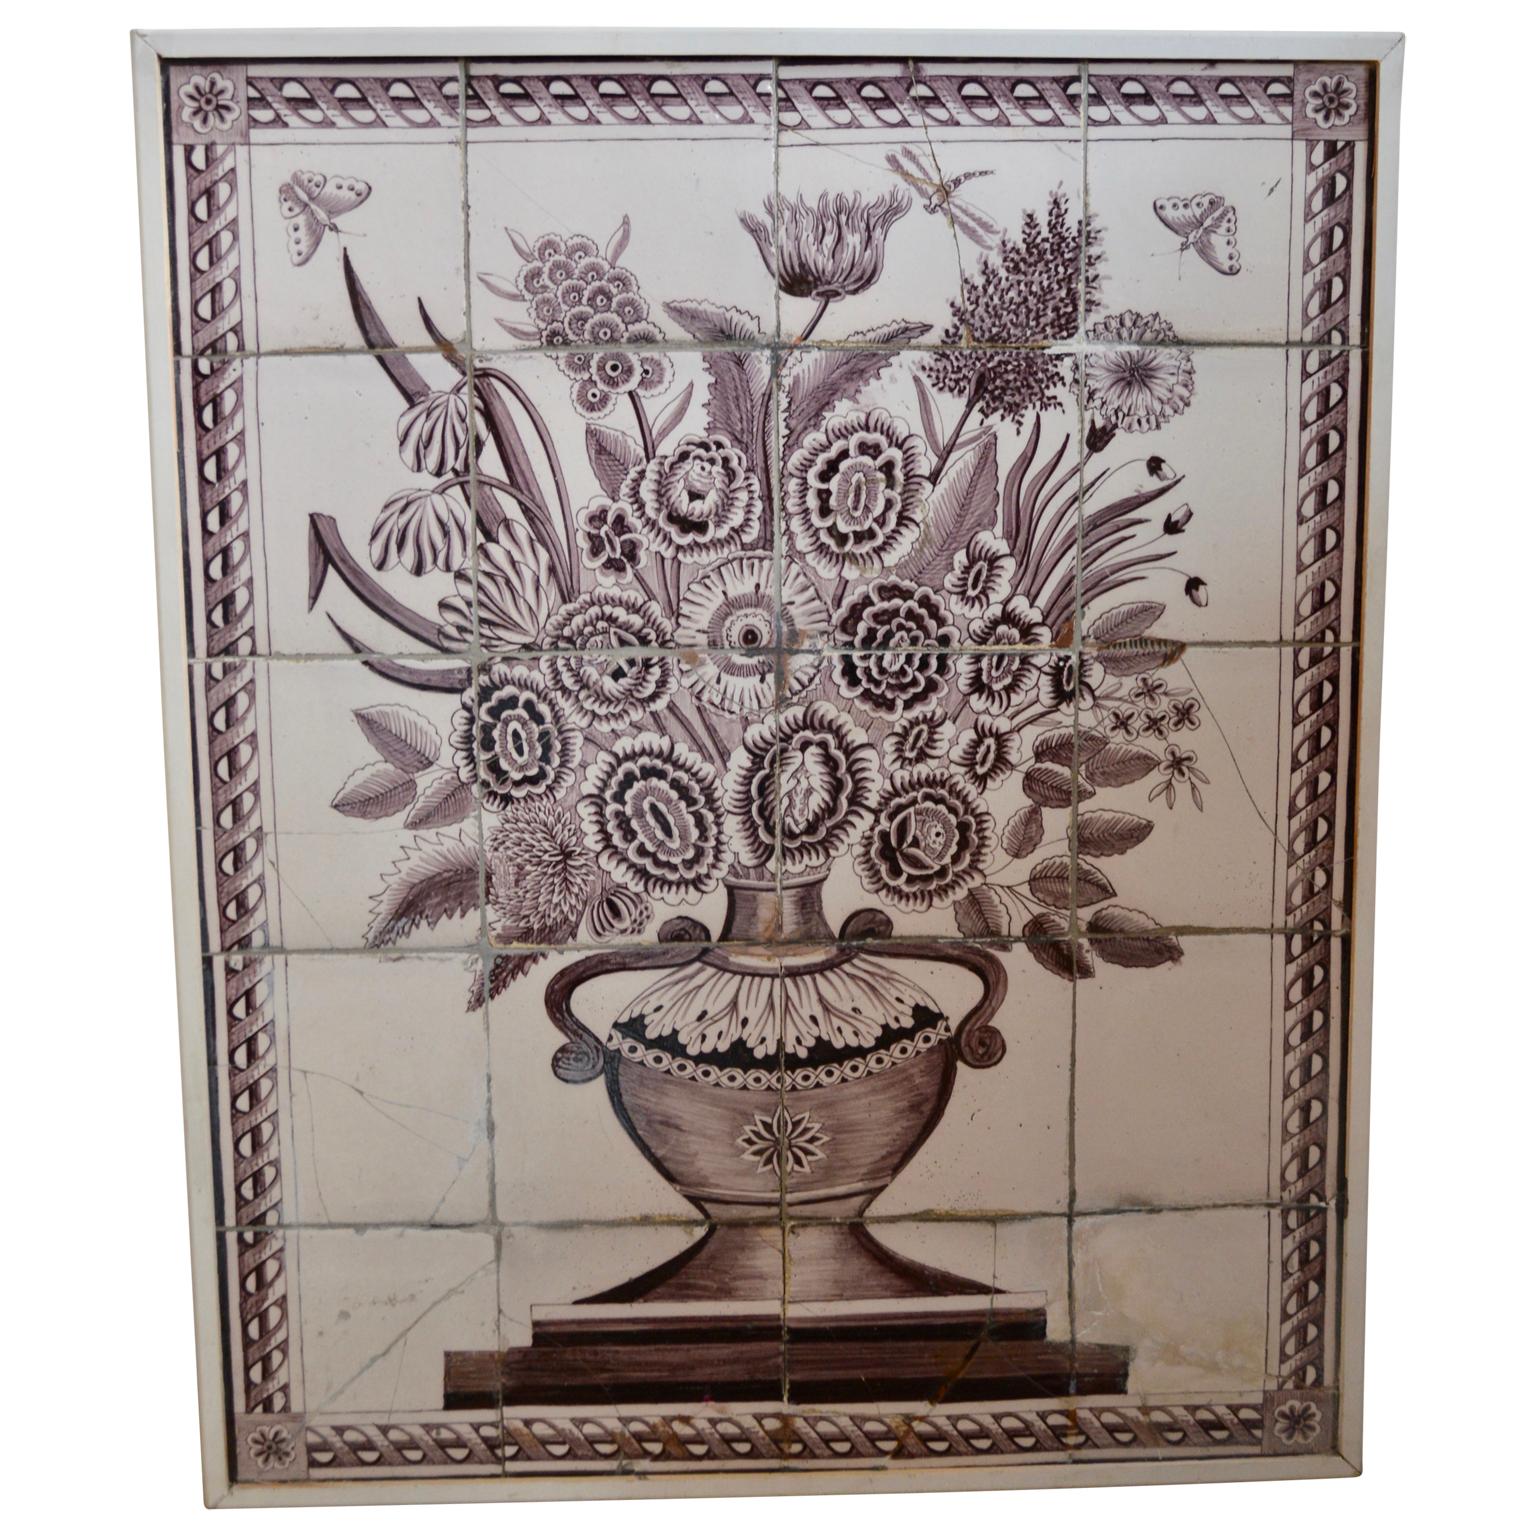 Large 19th century framed delft tile flower motif. 

Framed delft tile monochrome purple vase with flower motif.